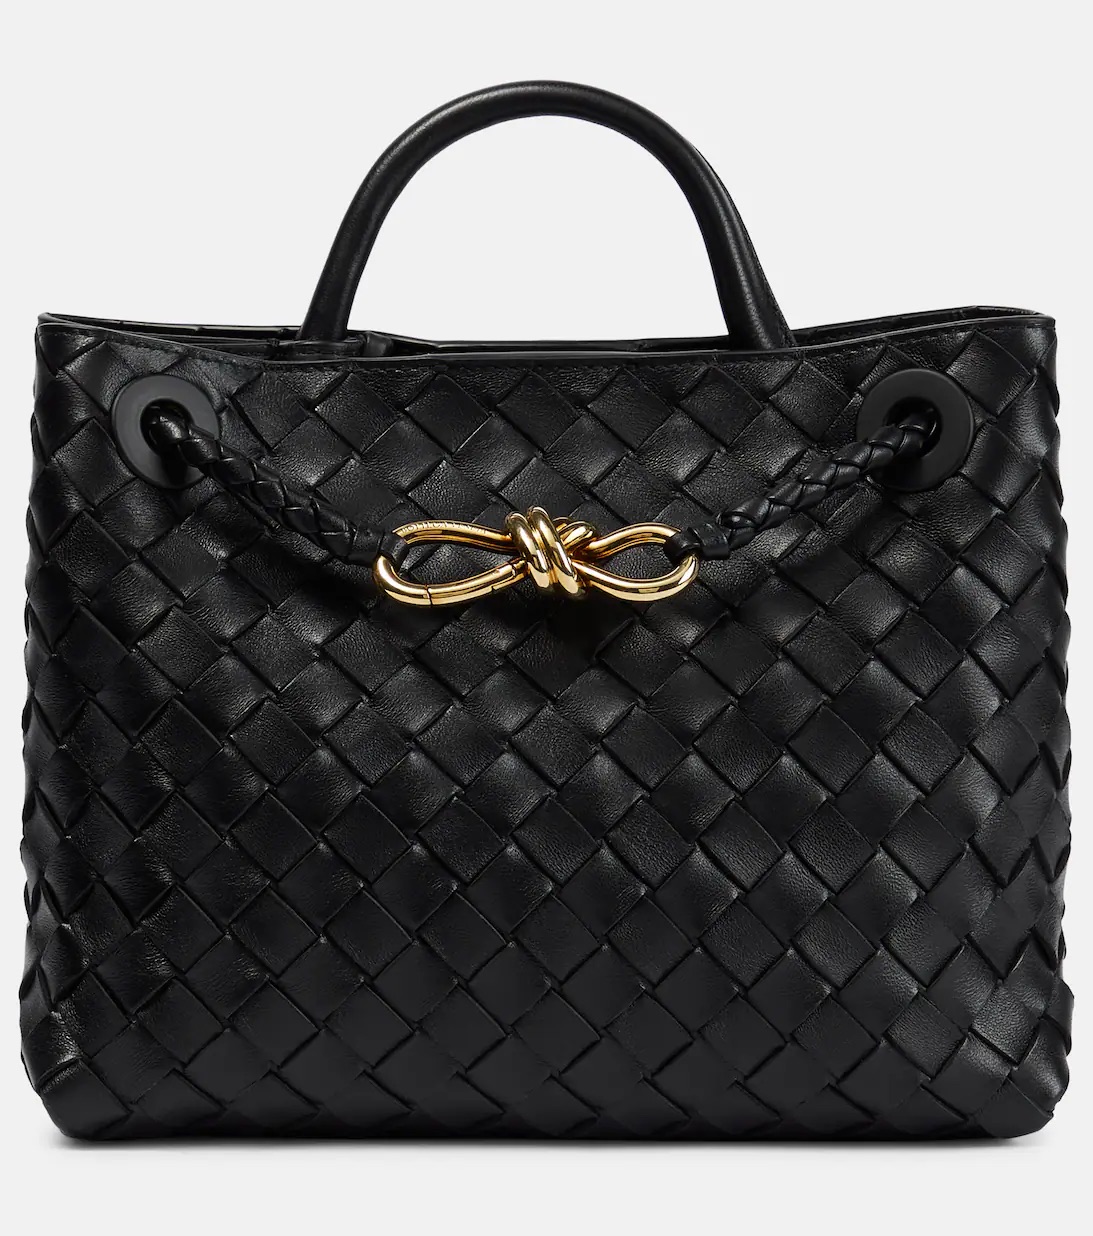 Top 10 Under The Radar Luxury Bags - luxfy